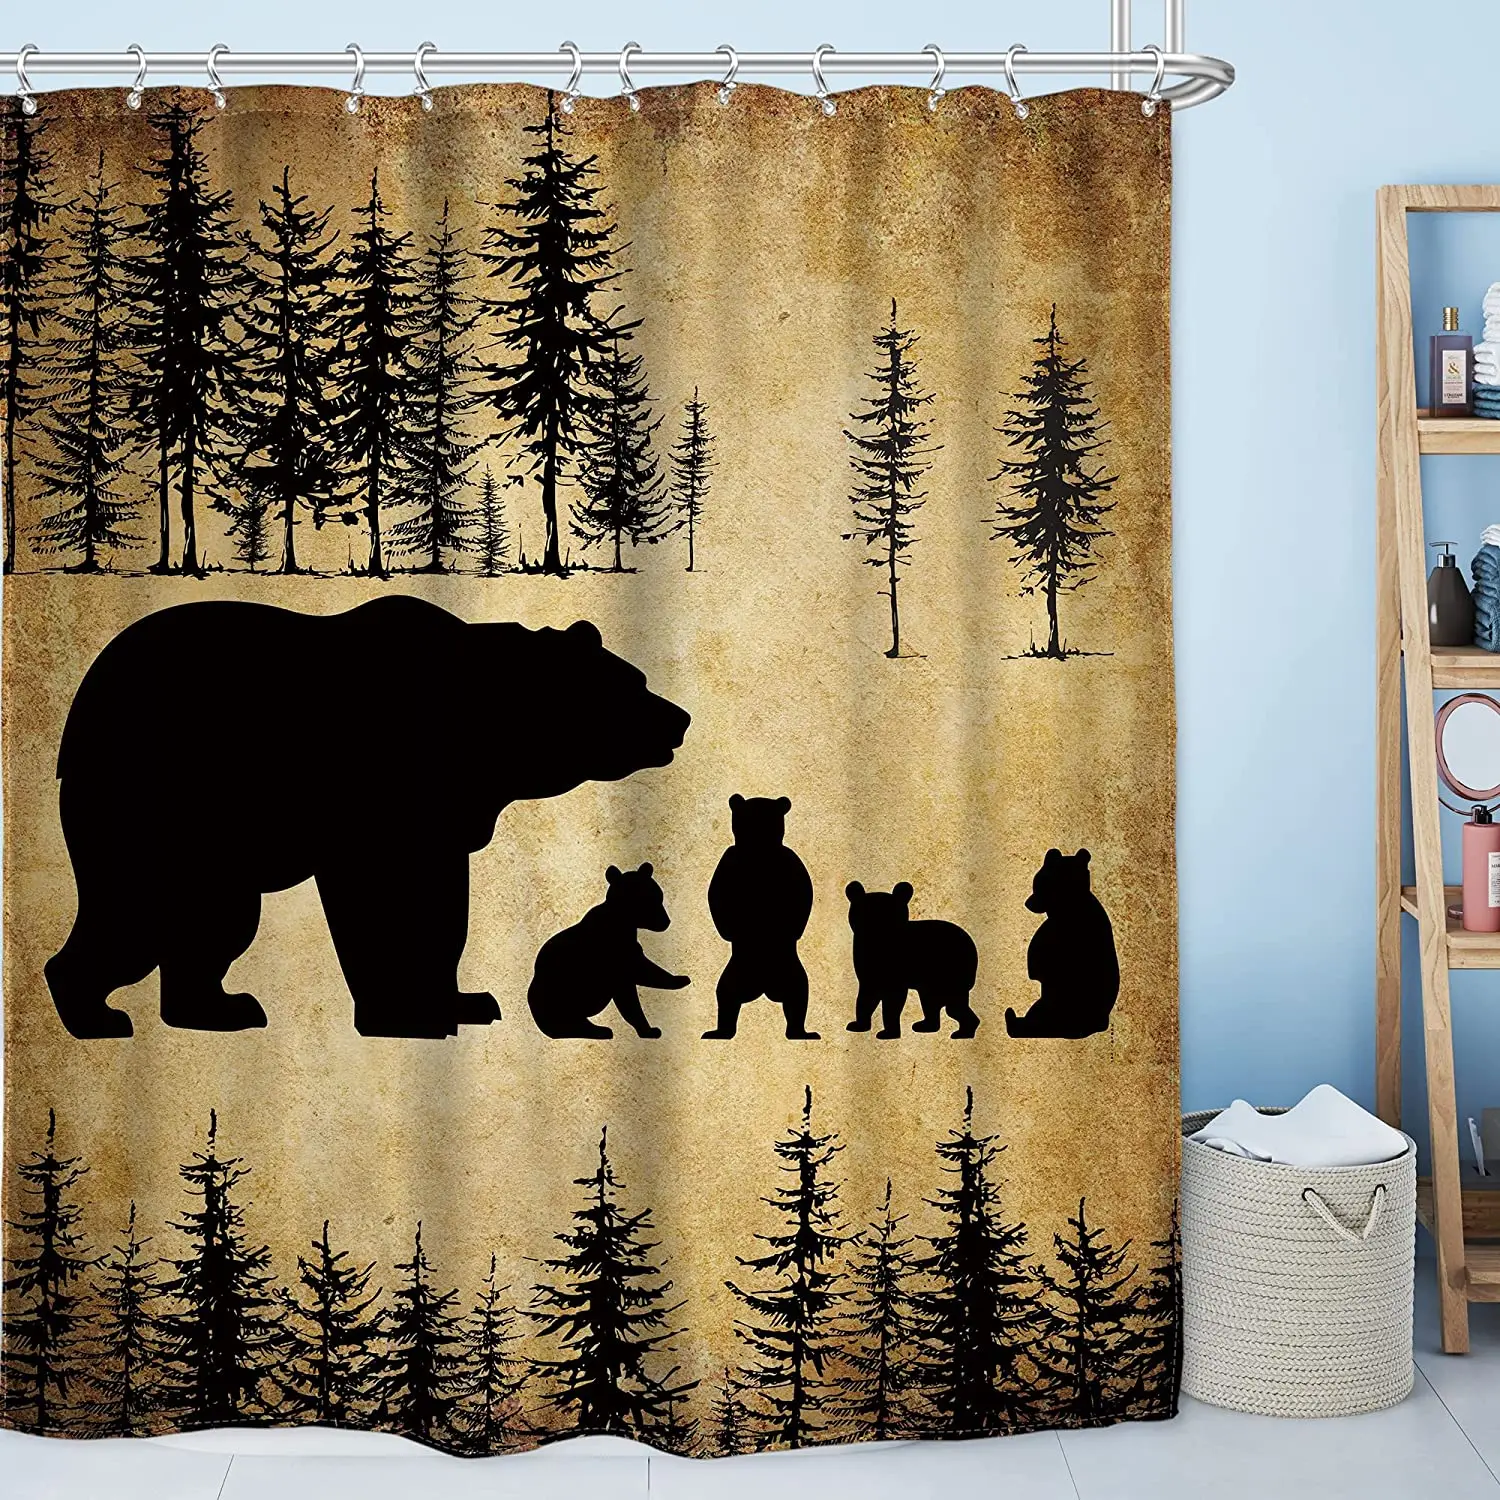 Shower Curtain Camper Moose Raccoon Bear Lodge Log Cabin Bathroom Decor 